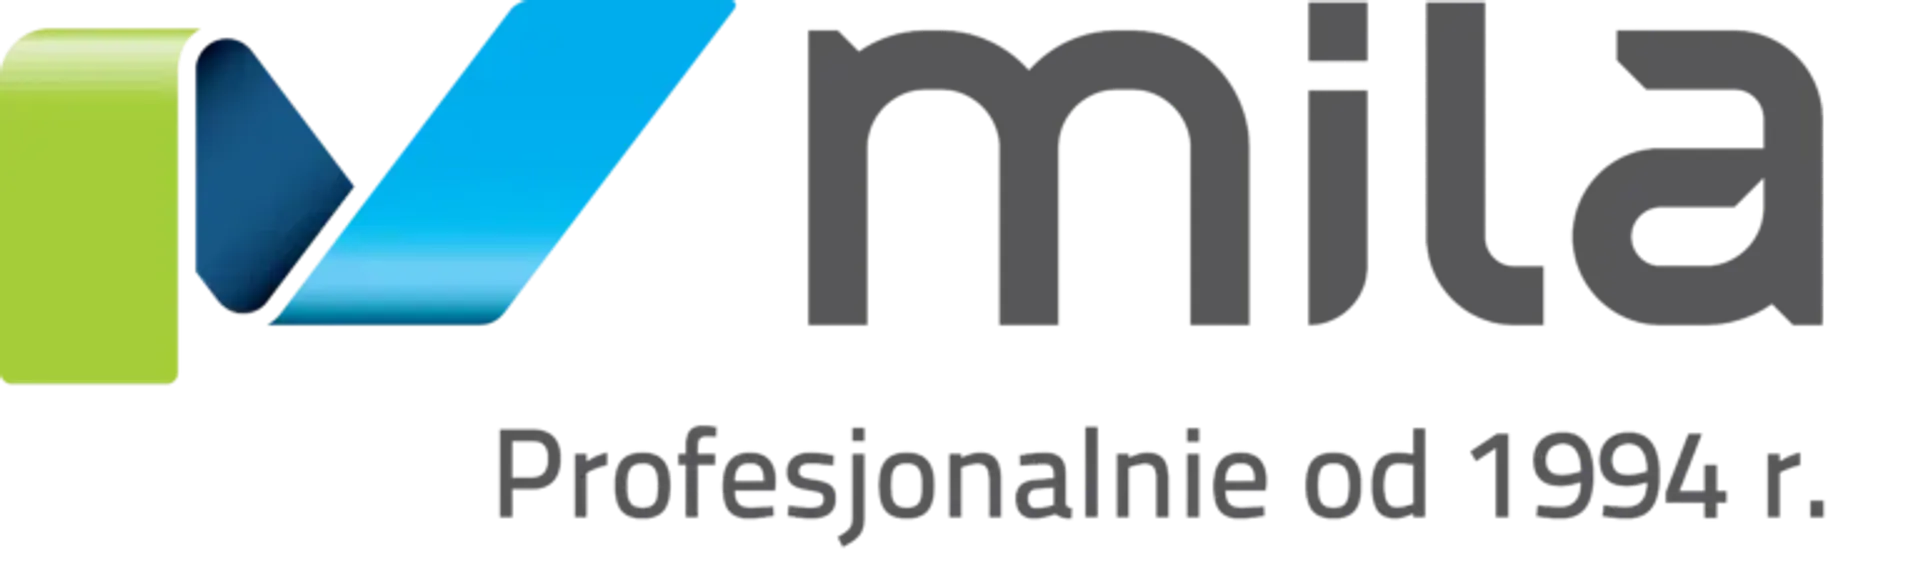 MILA logo